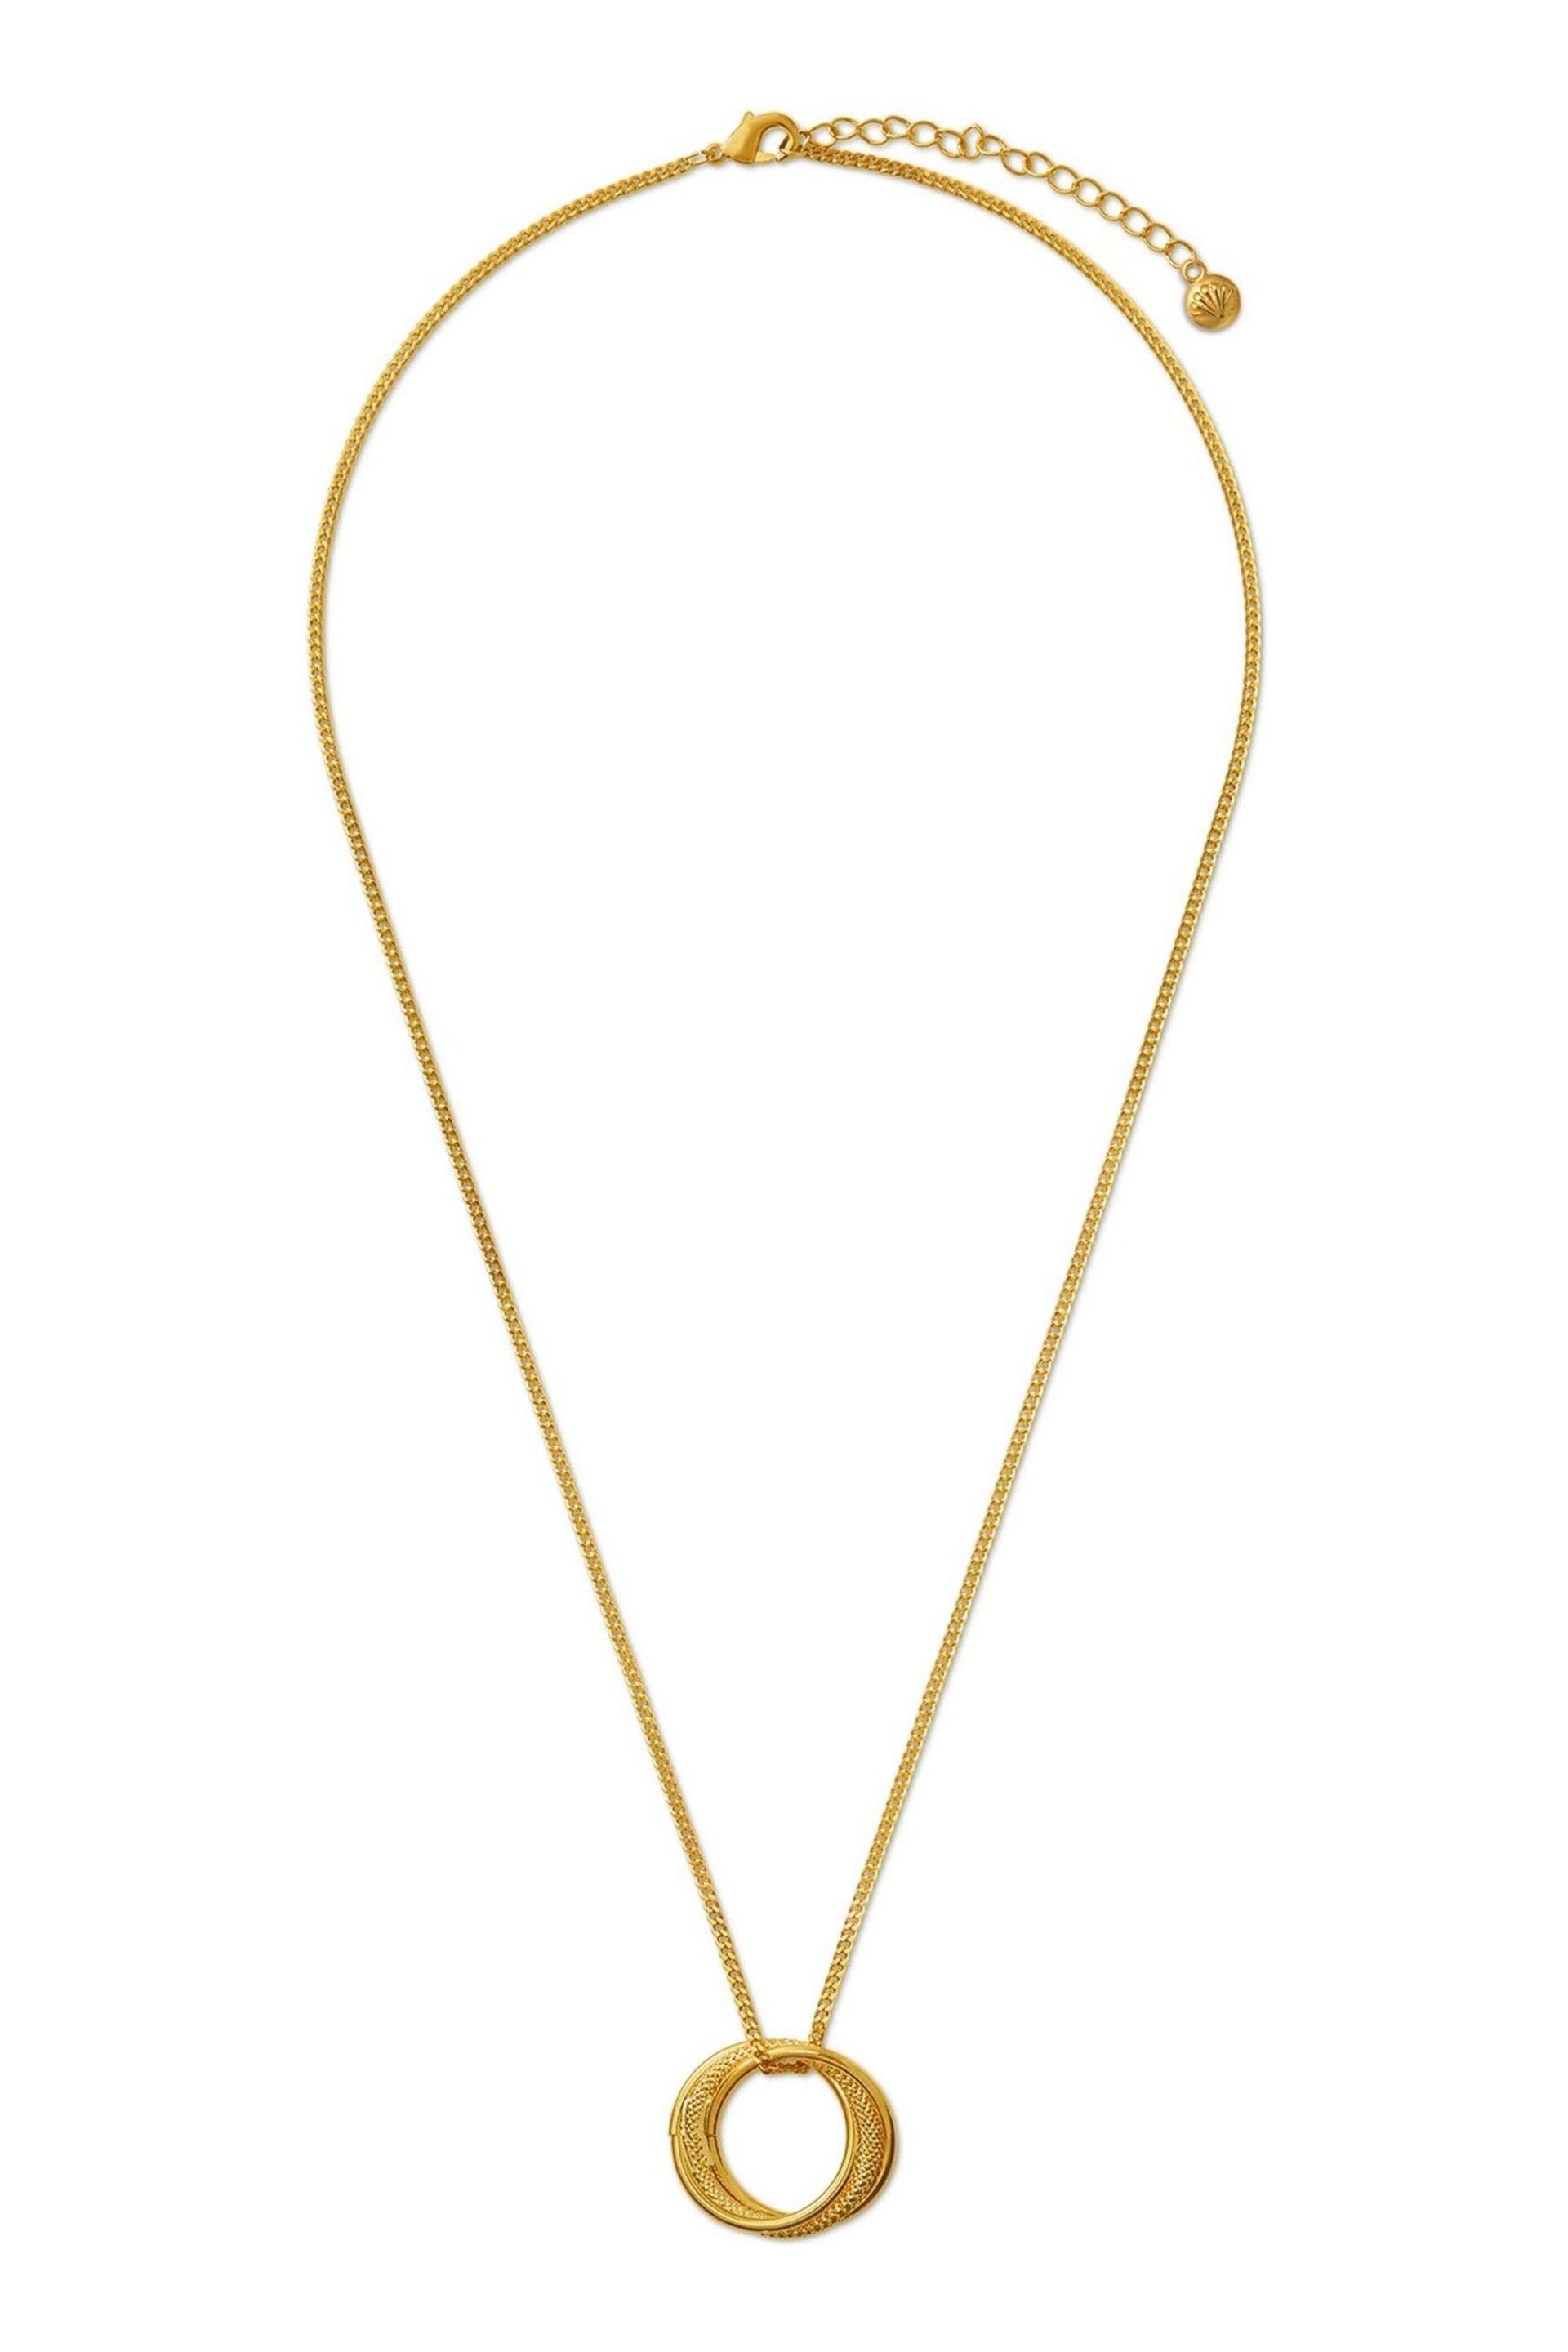 Orelia London 18k Gold Plating Textured Interlocking Open Circle 18" Necklace - Image 1 of 2